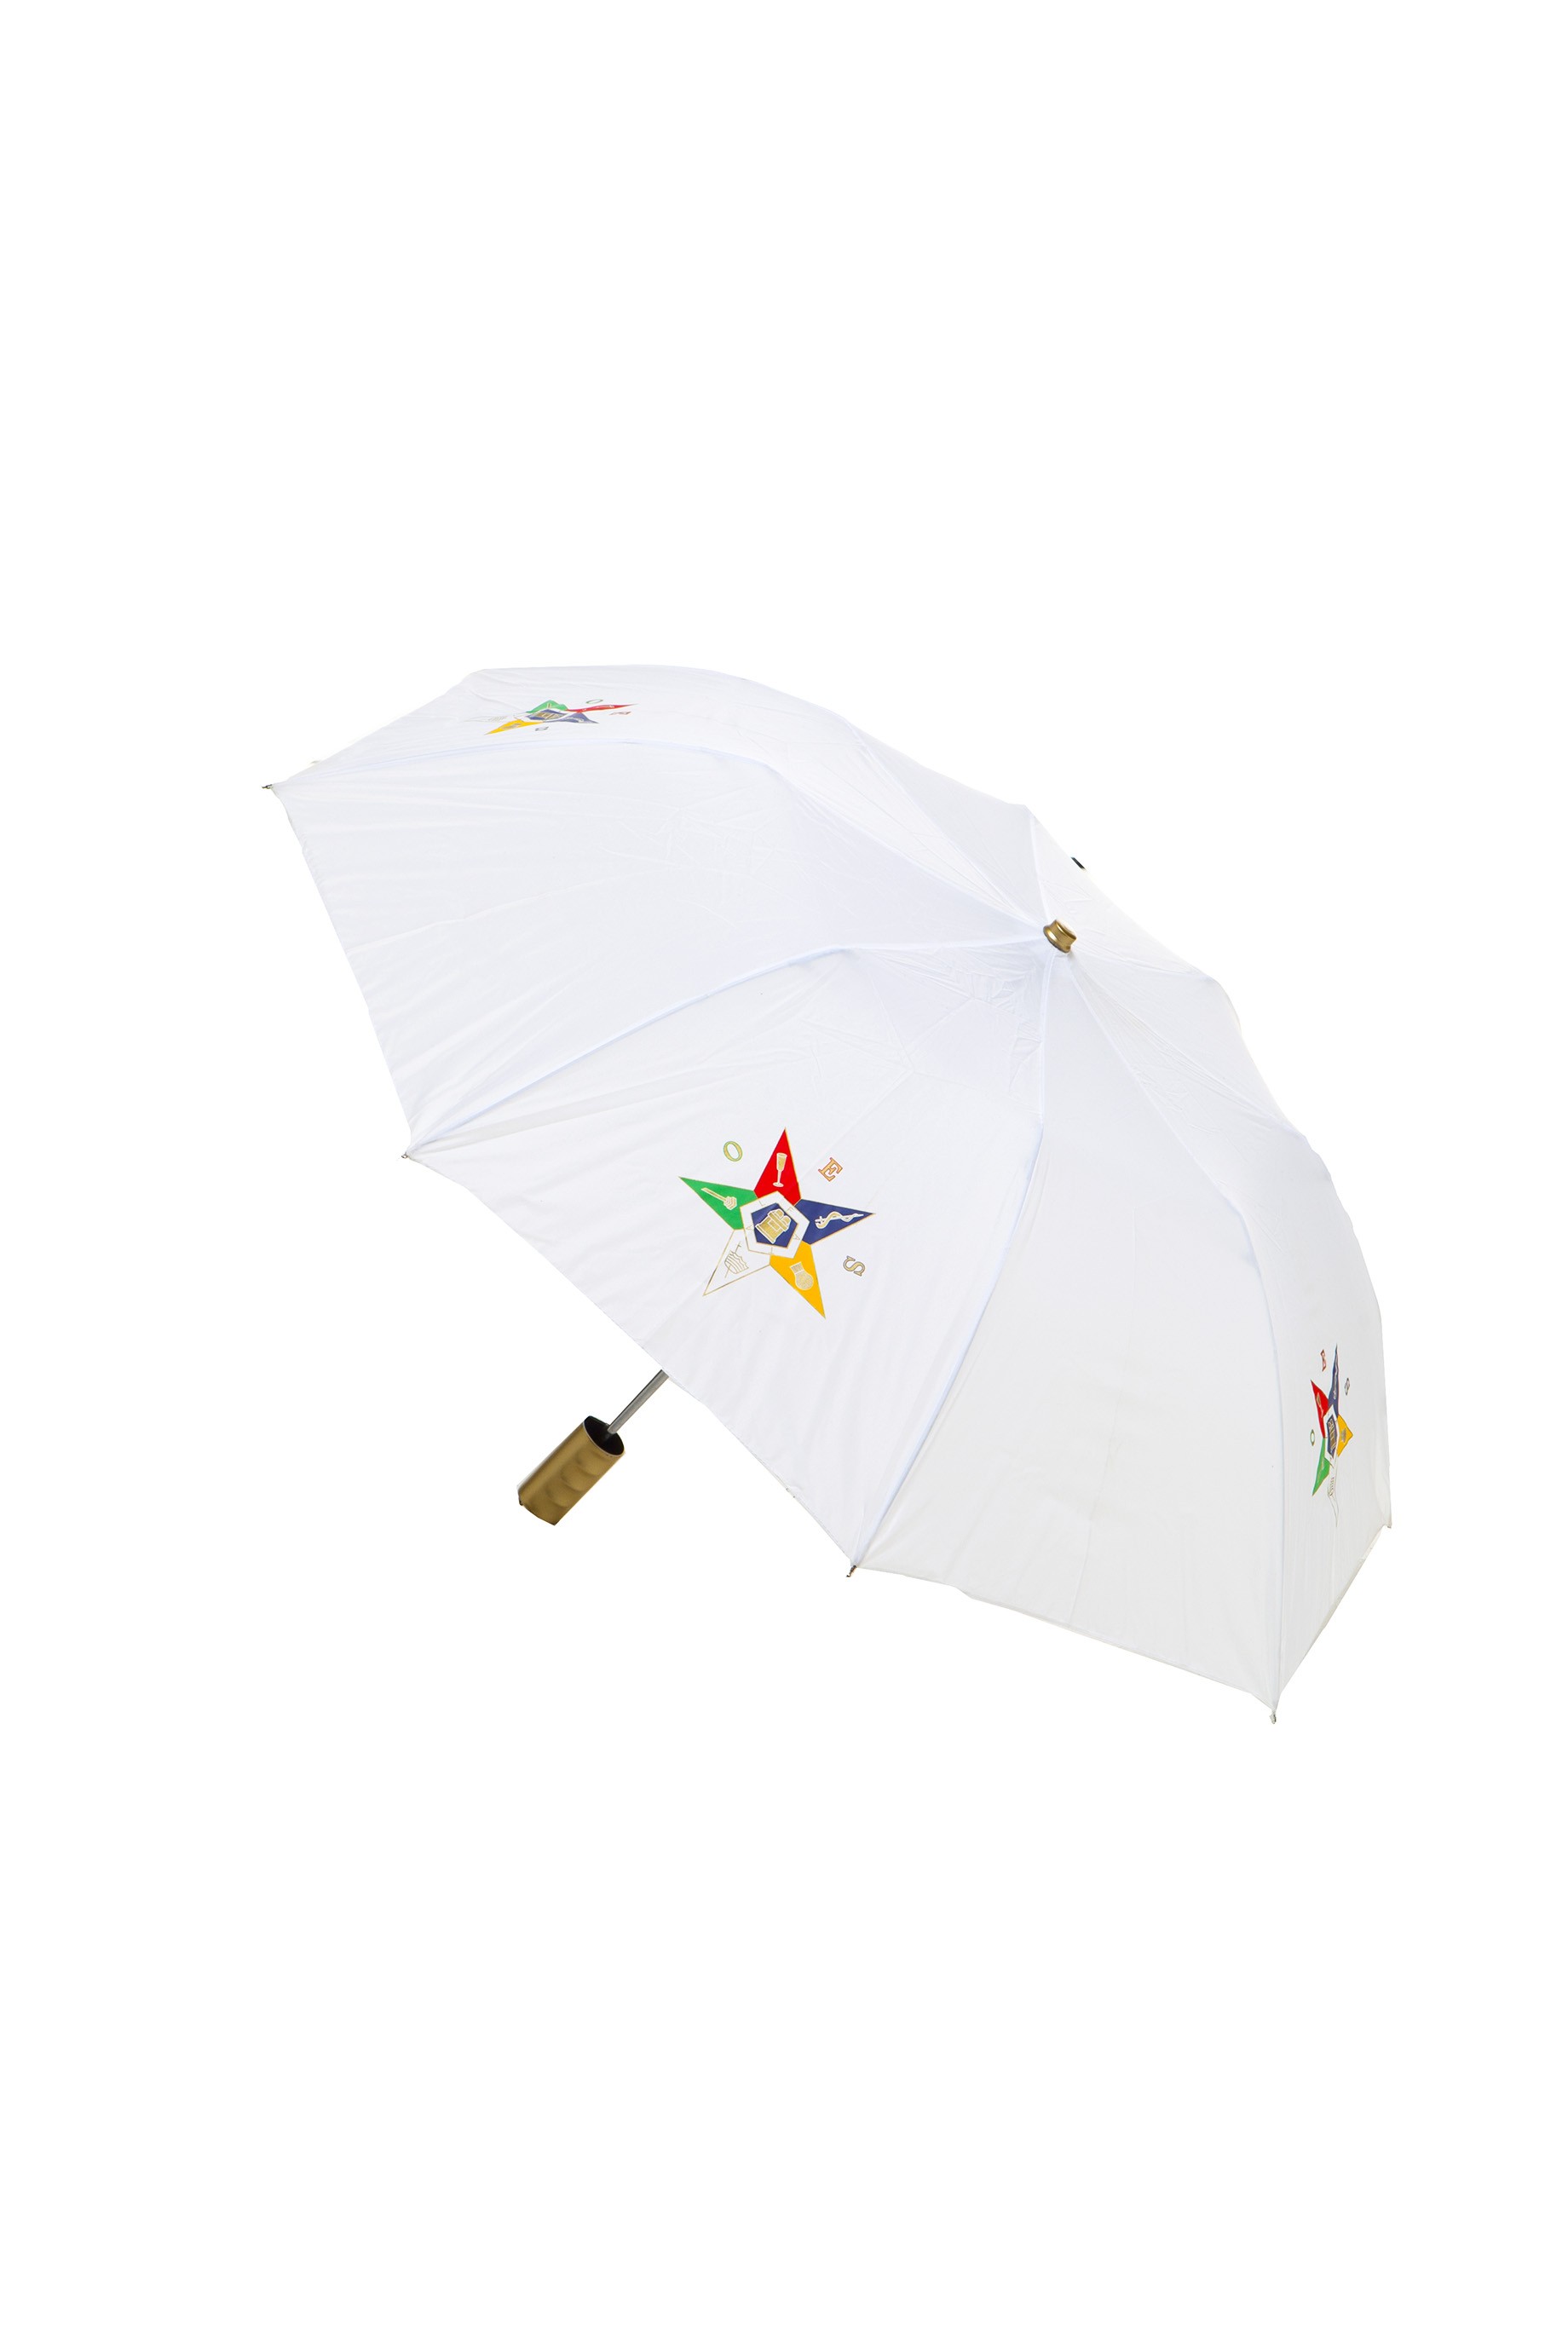 Order Of The Eastern Star Umbrella